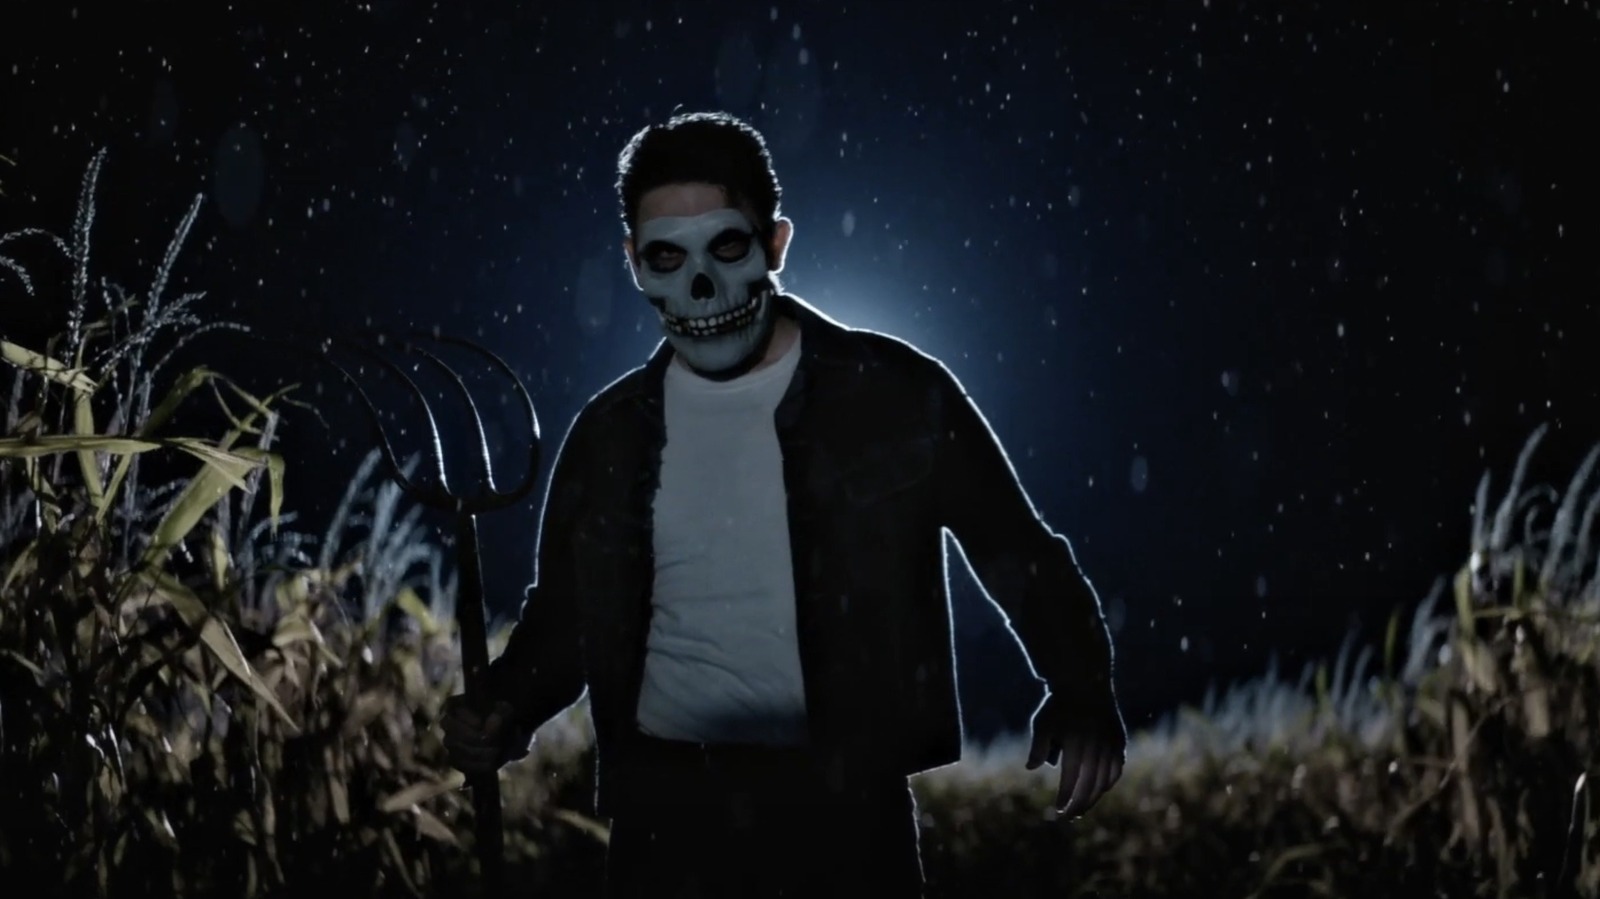 The Dark Harvest Trailer Promises A Proper Halloween Treat For Horror Fans Next Month